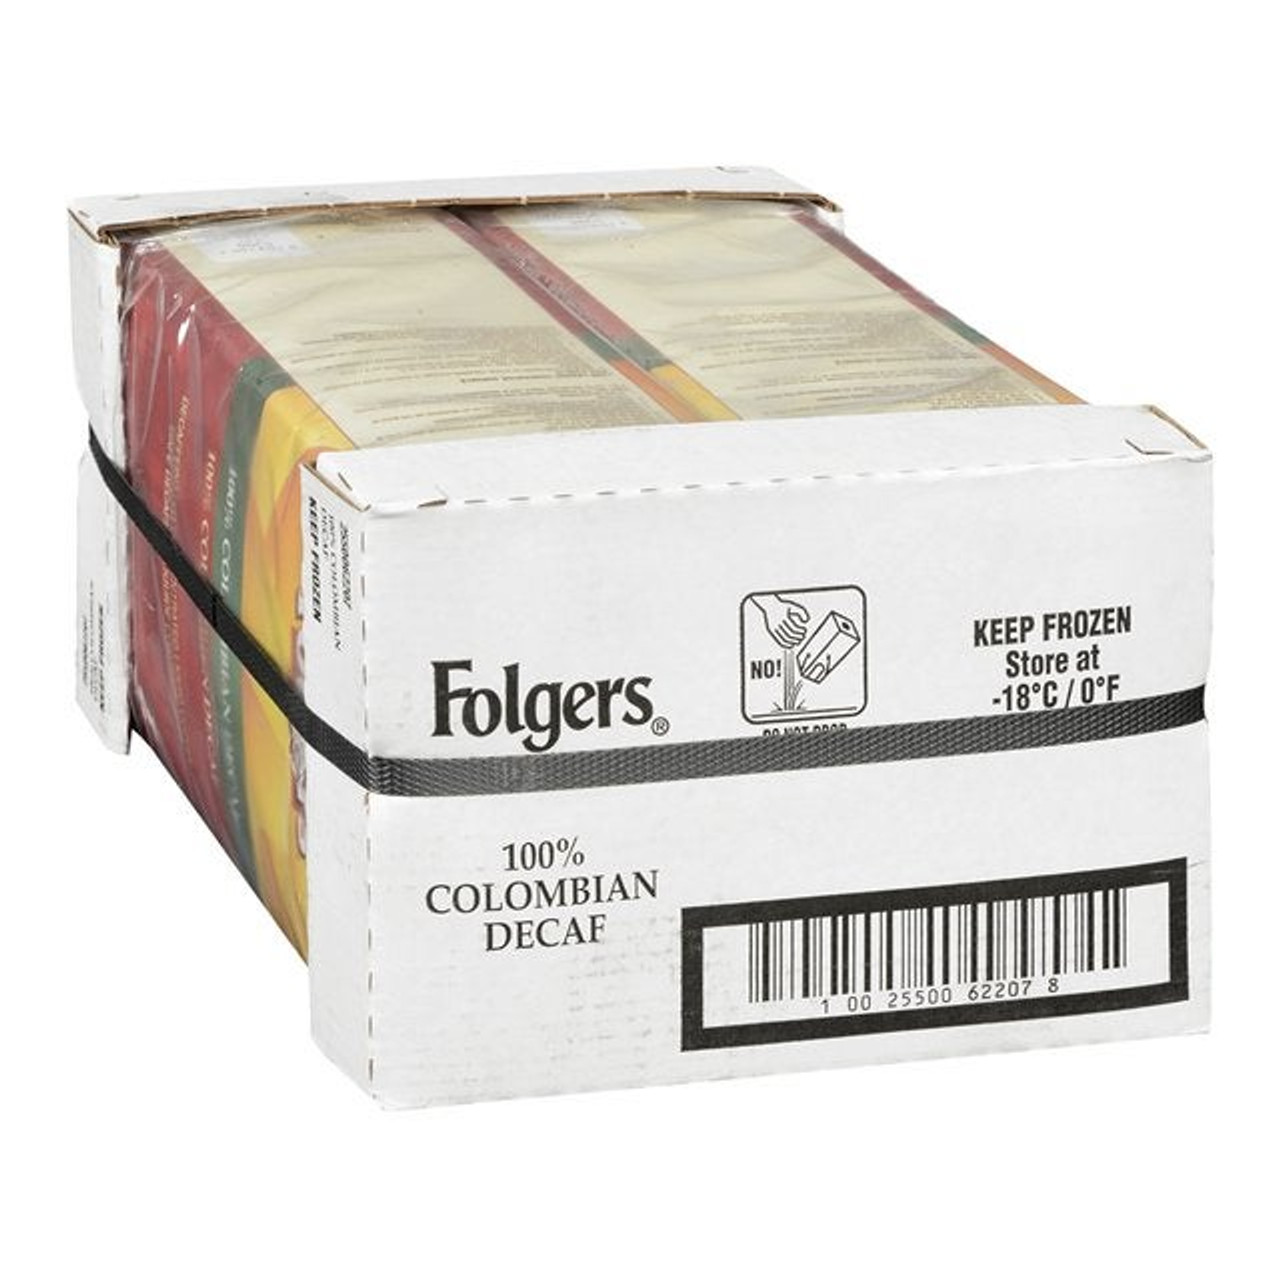 Folgers Colombian Decafinated Coffee, 100 Percent, Frozen | 2L/Unit, 2 Units/Case